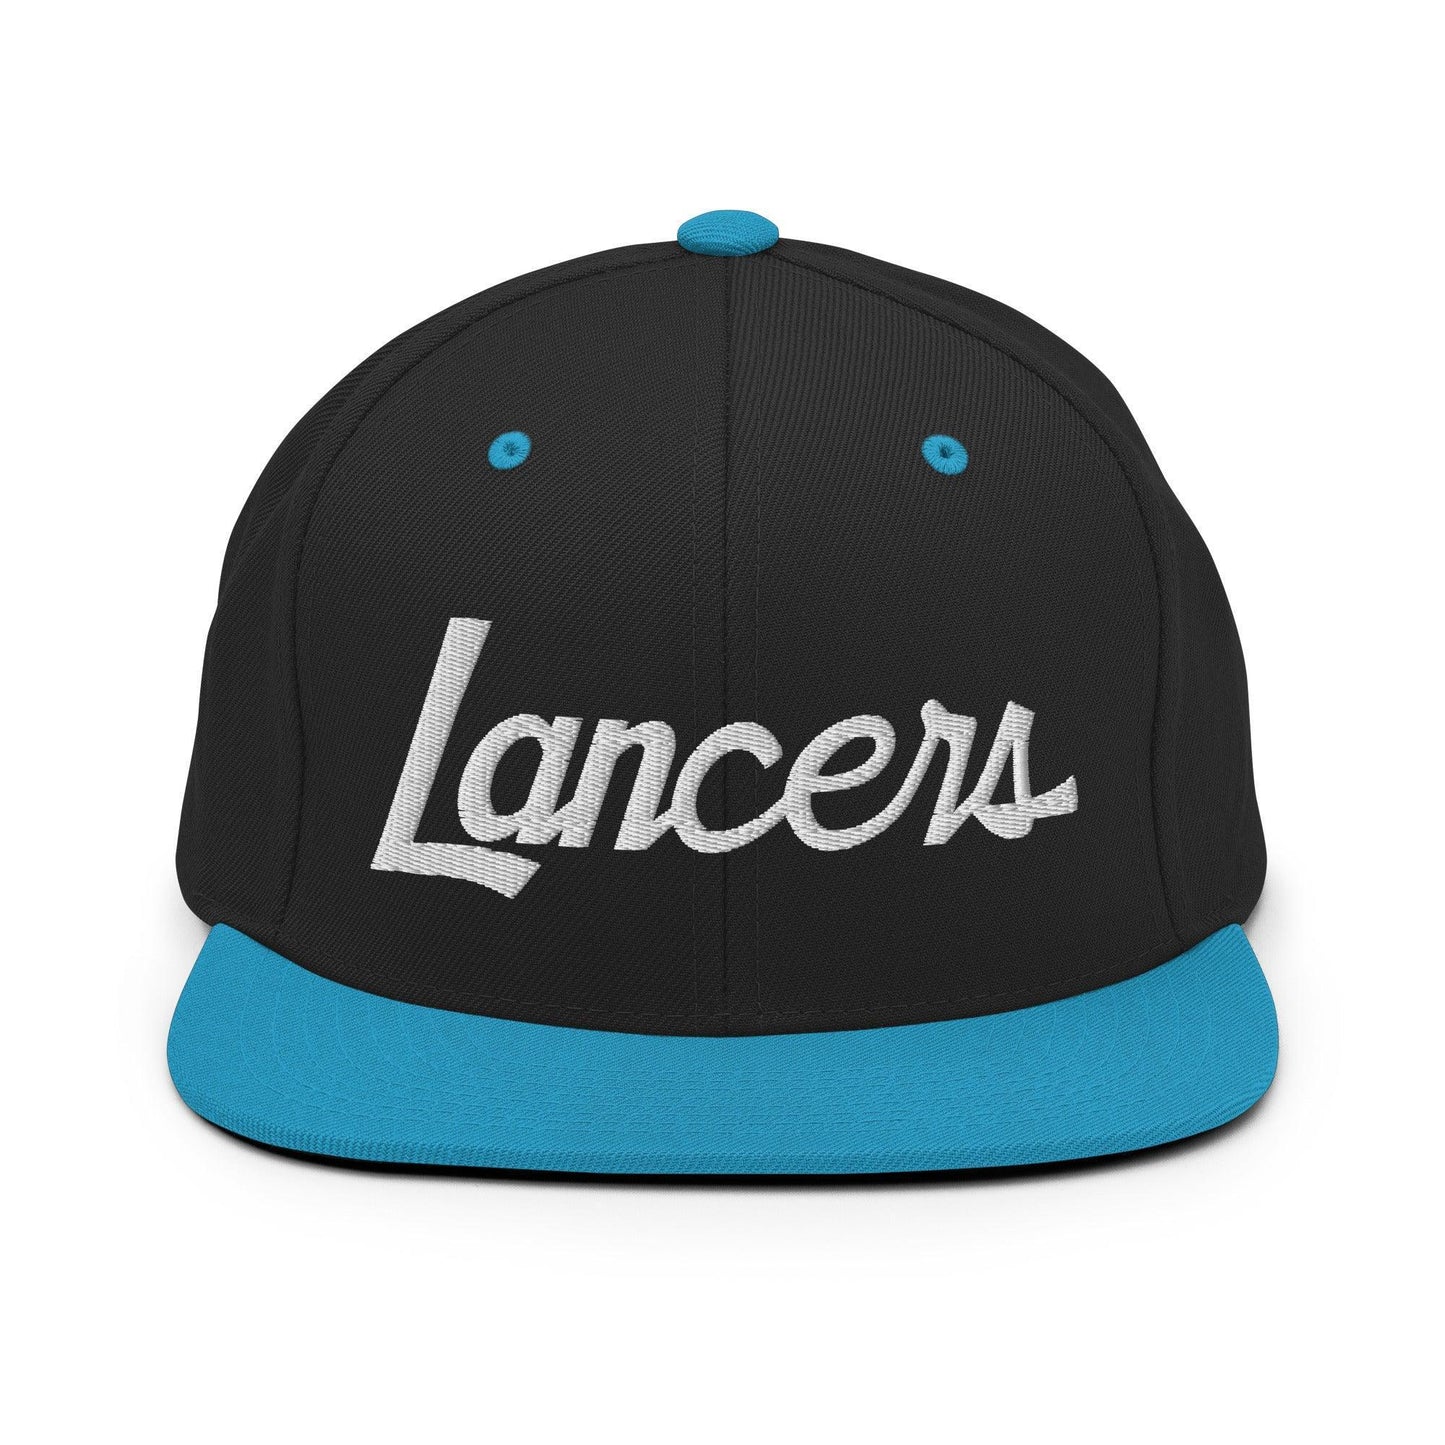 Lancers School Mascot Script Snapback Hat Black Teal